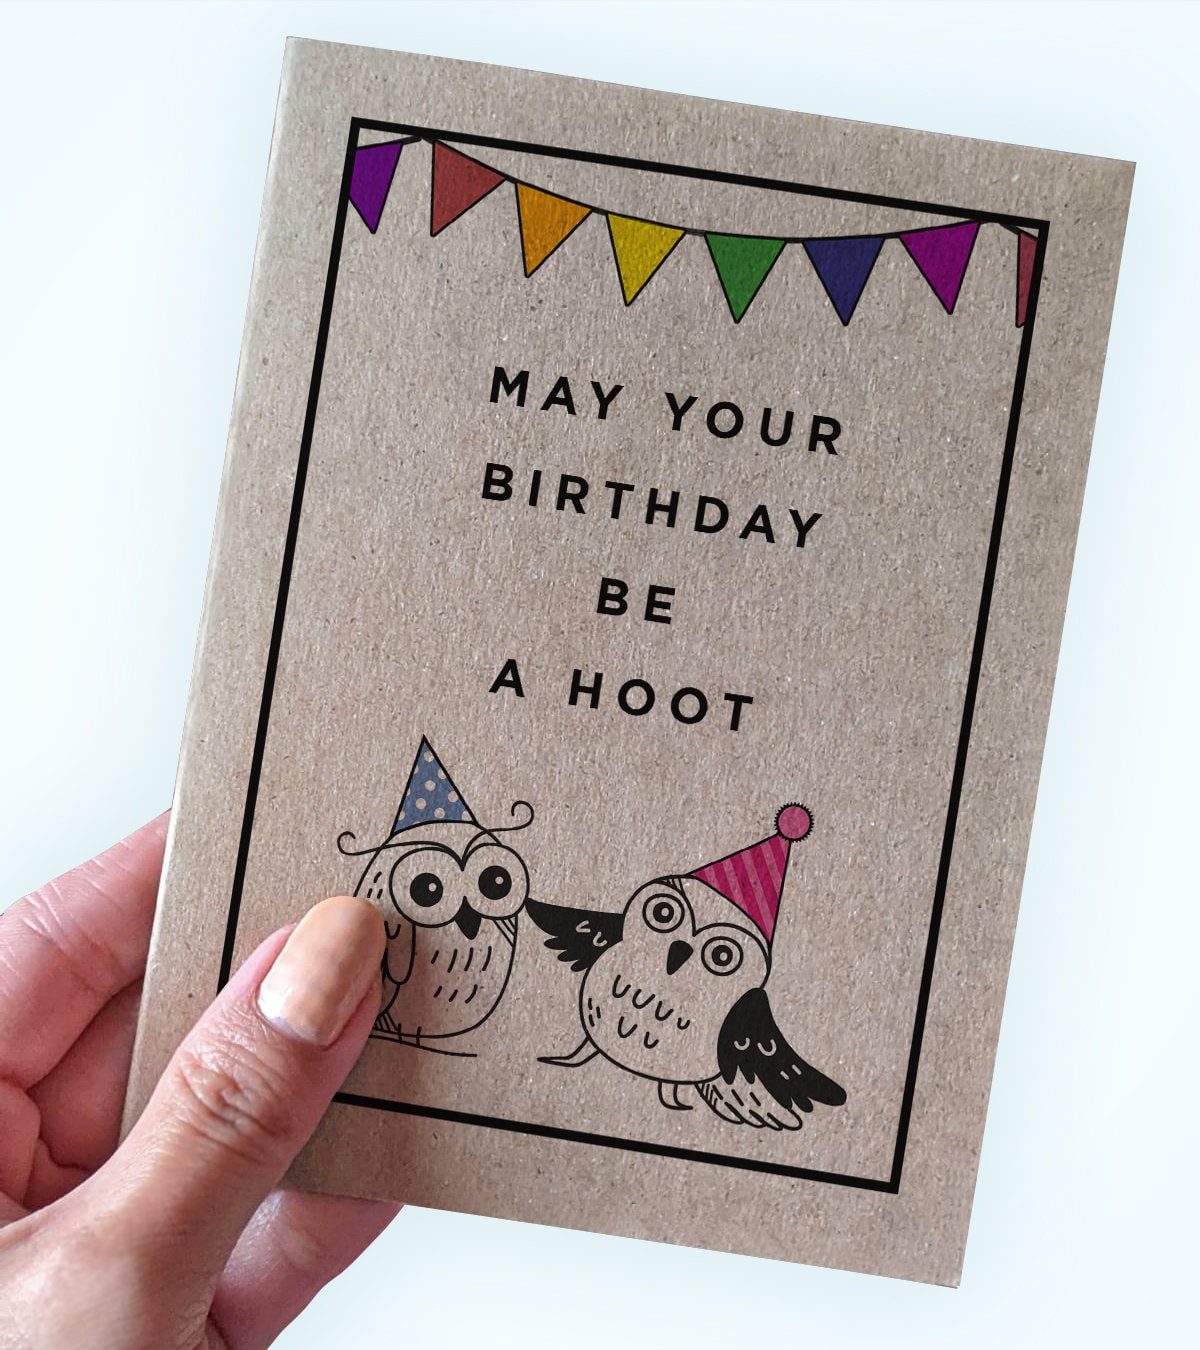 Owl Birthday Card - Pun Birthday Card - May Your Birthday Be A Hoot - Fun Birthday Card - Animal Pun